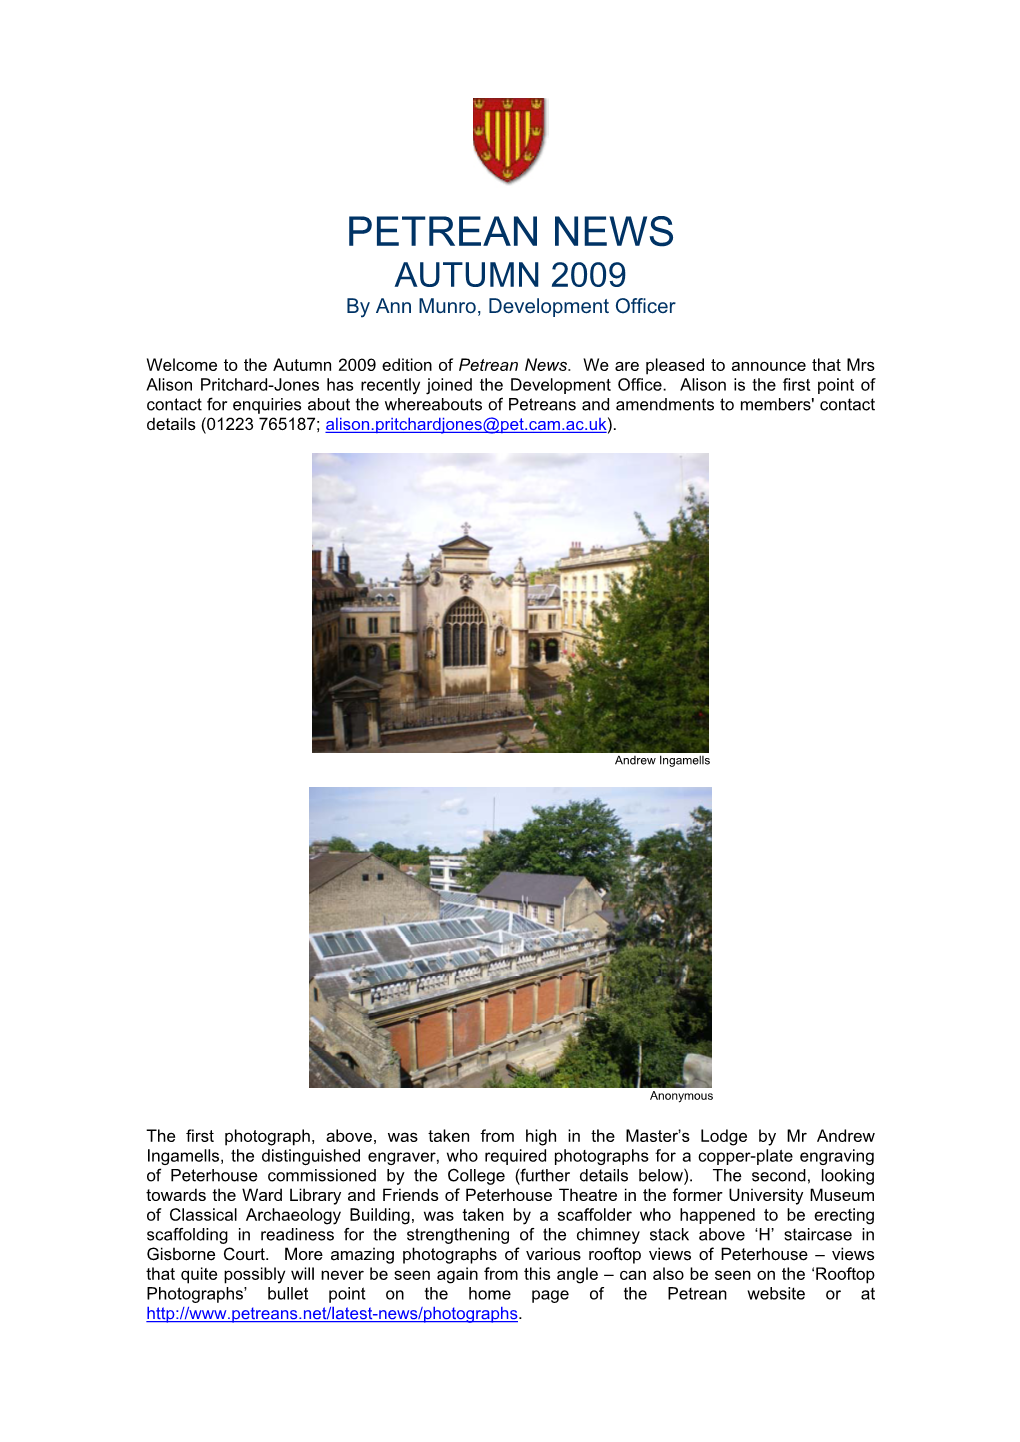 PETREAN NEWS AUTUMN 2009 by Ann Munro, Development Officer